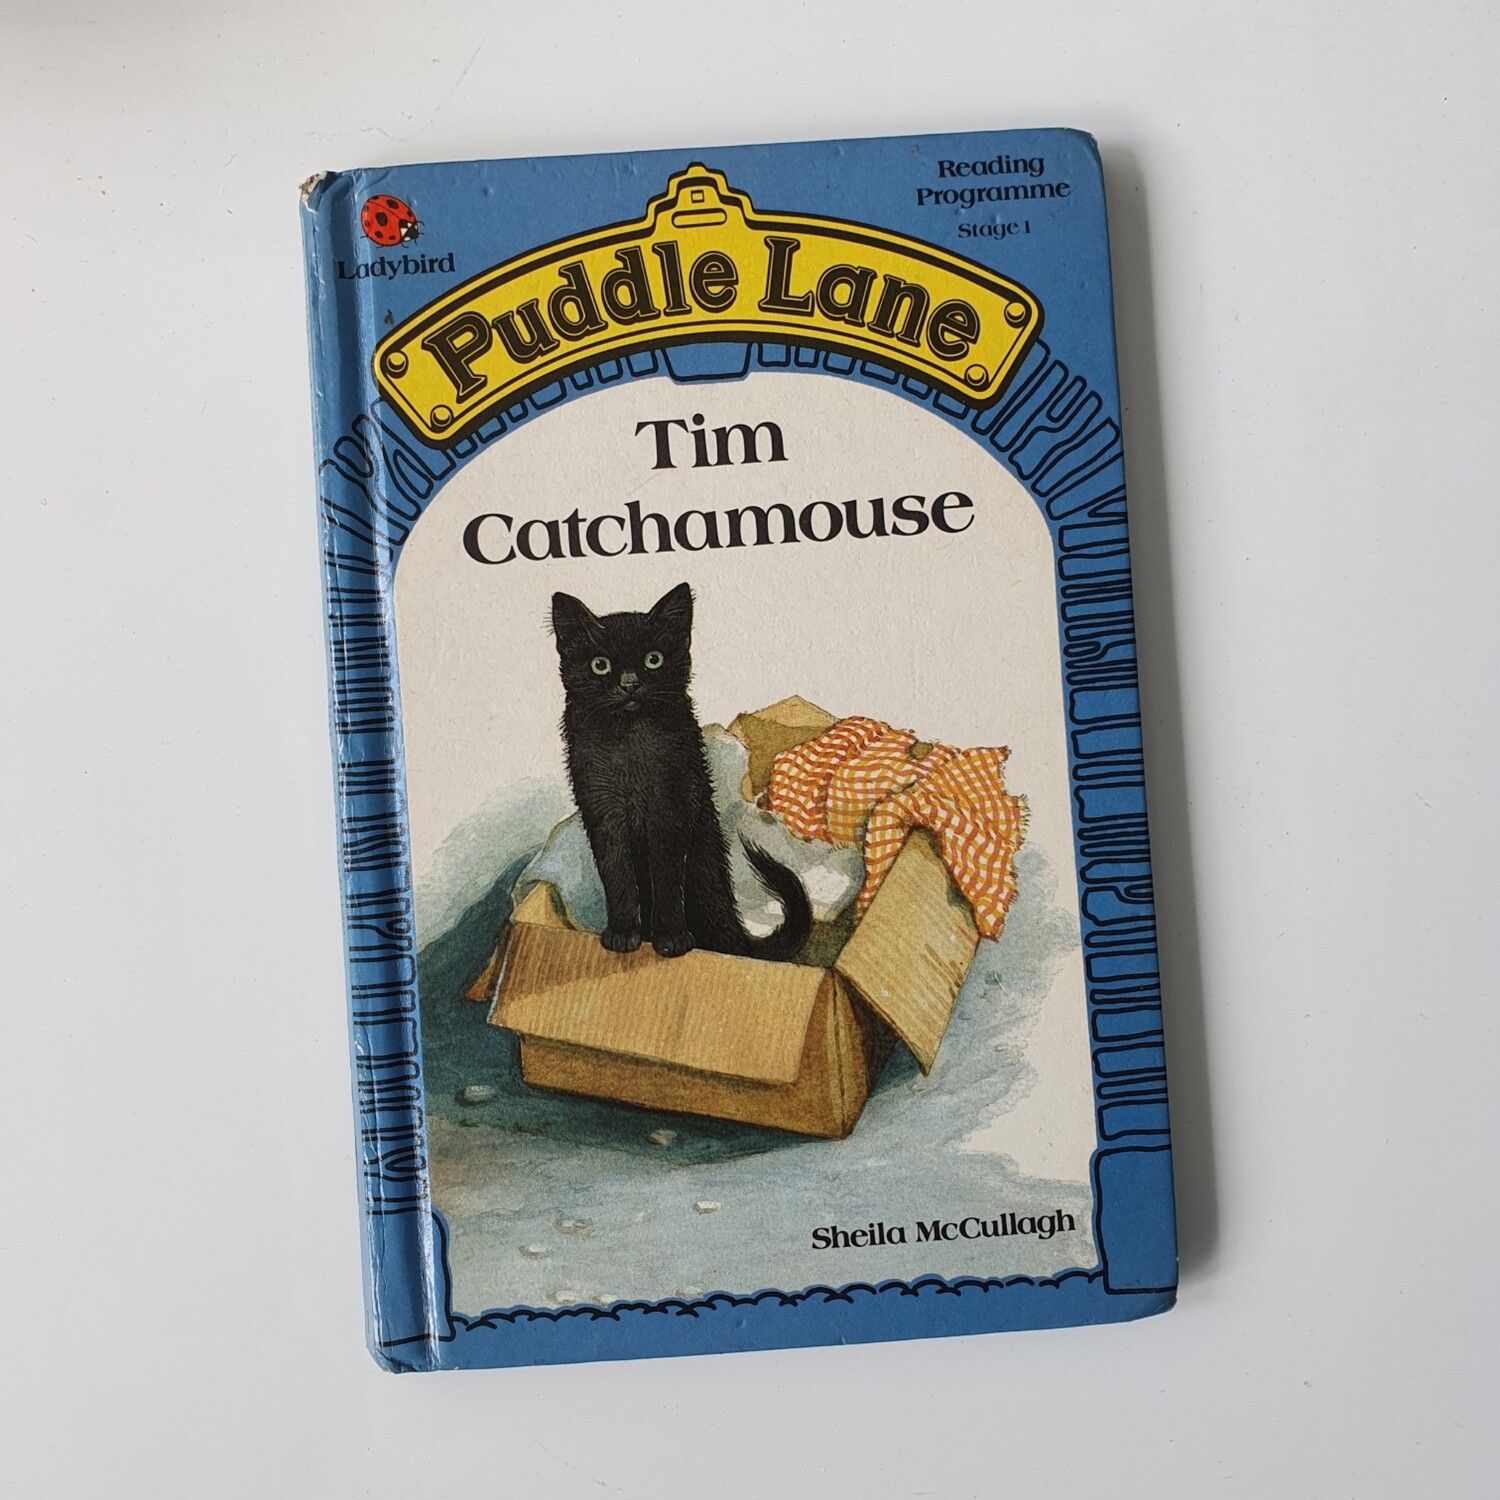 Tim Catchamouse - black cat, Puddle Lane Notebook - Ladybird book